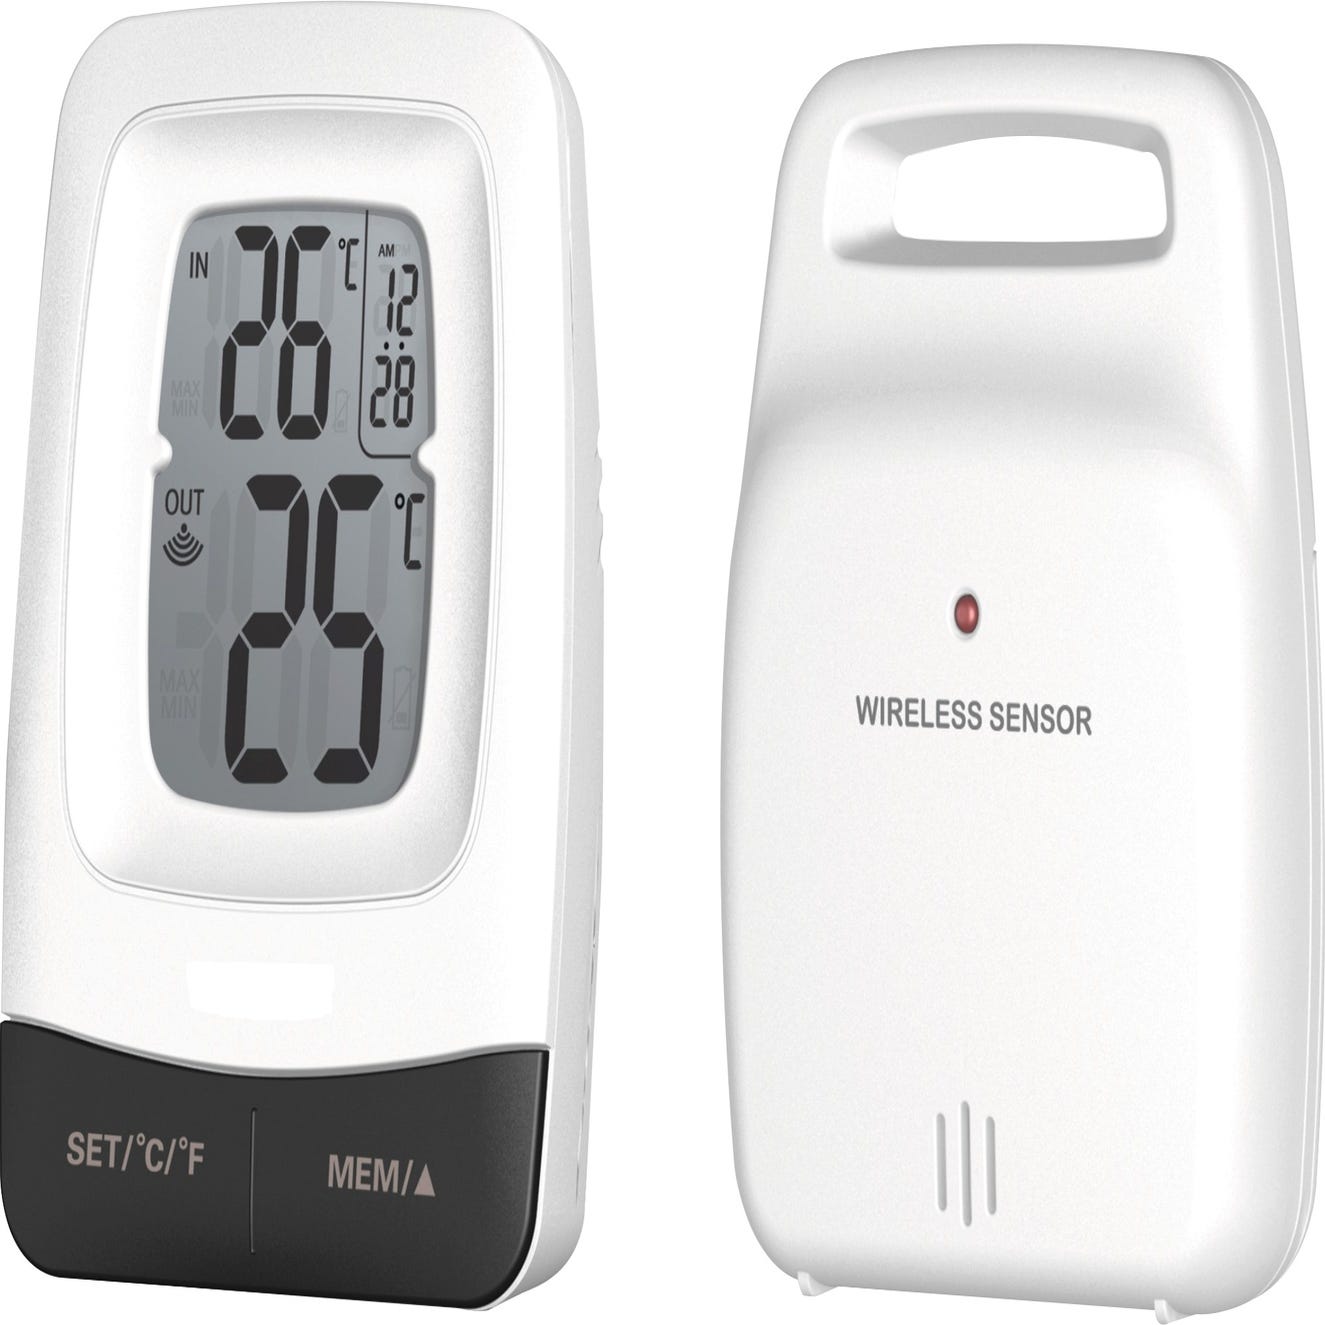 FISHTEC Thermometre Mini/Maxi Grands chiffres - Interieur et